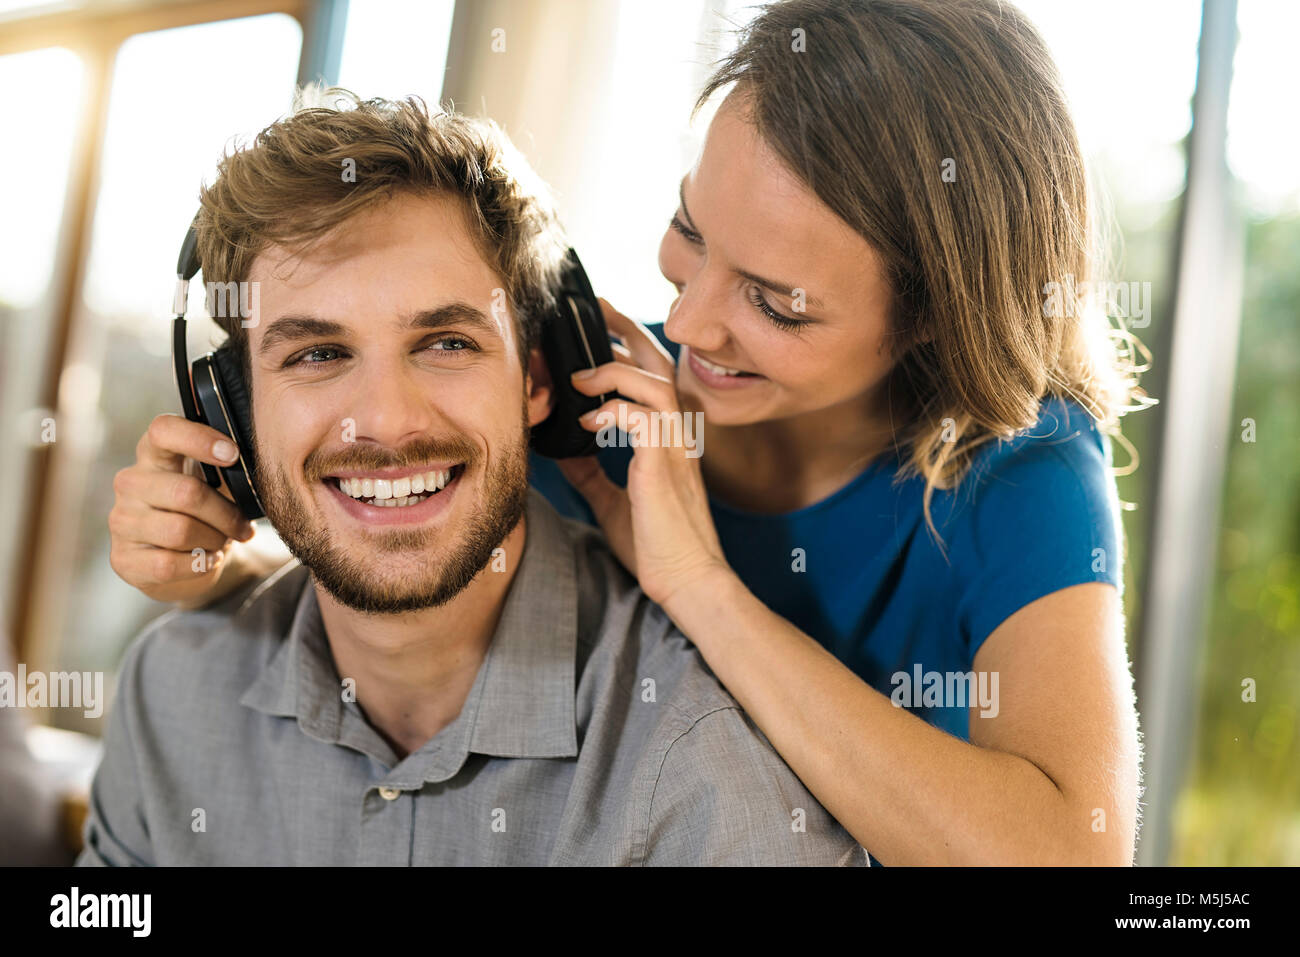 Smiling woman putting on headphones on boyfriend Stock Photo